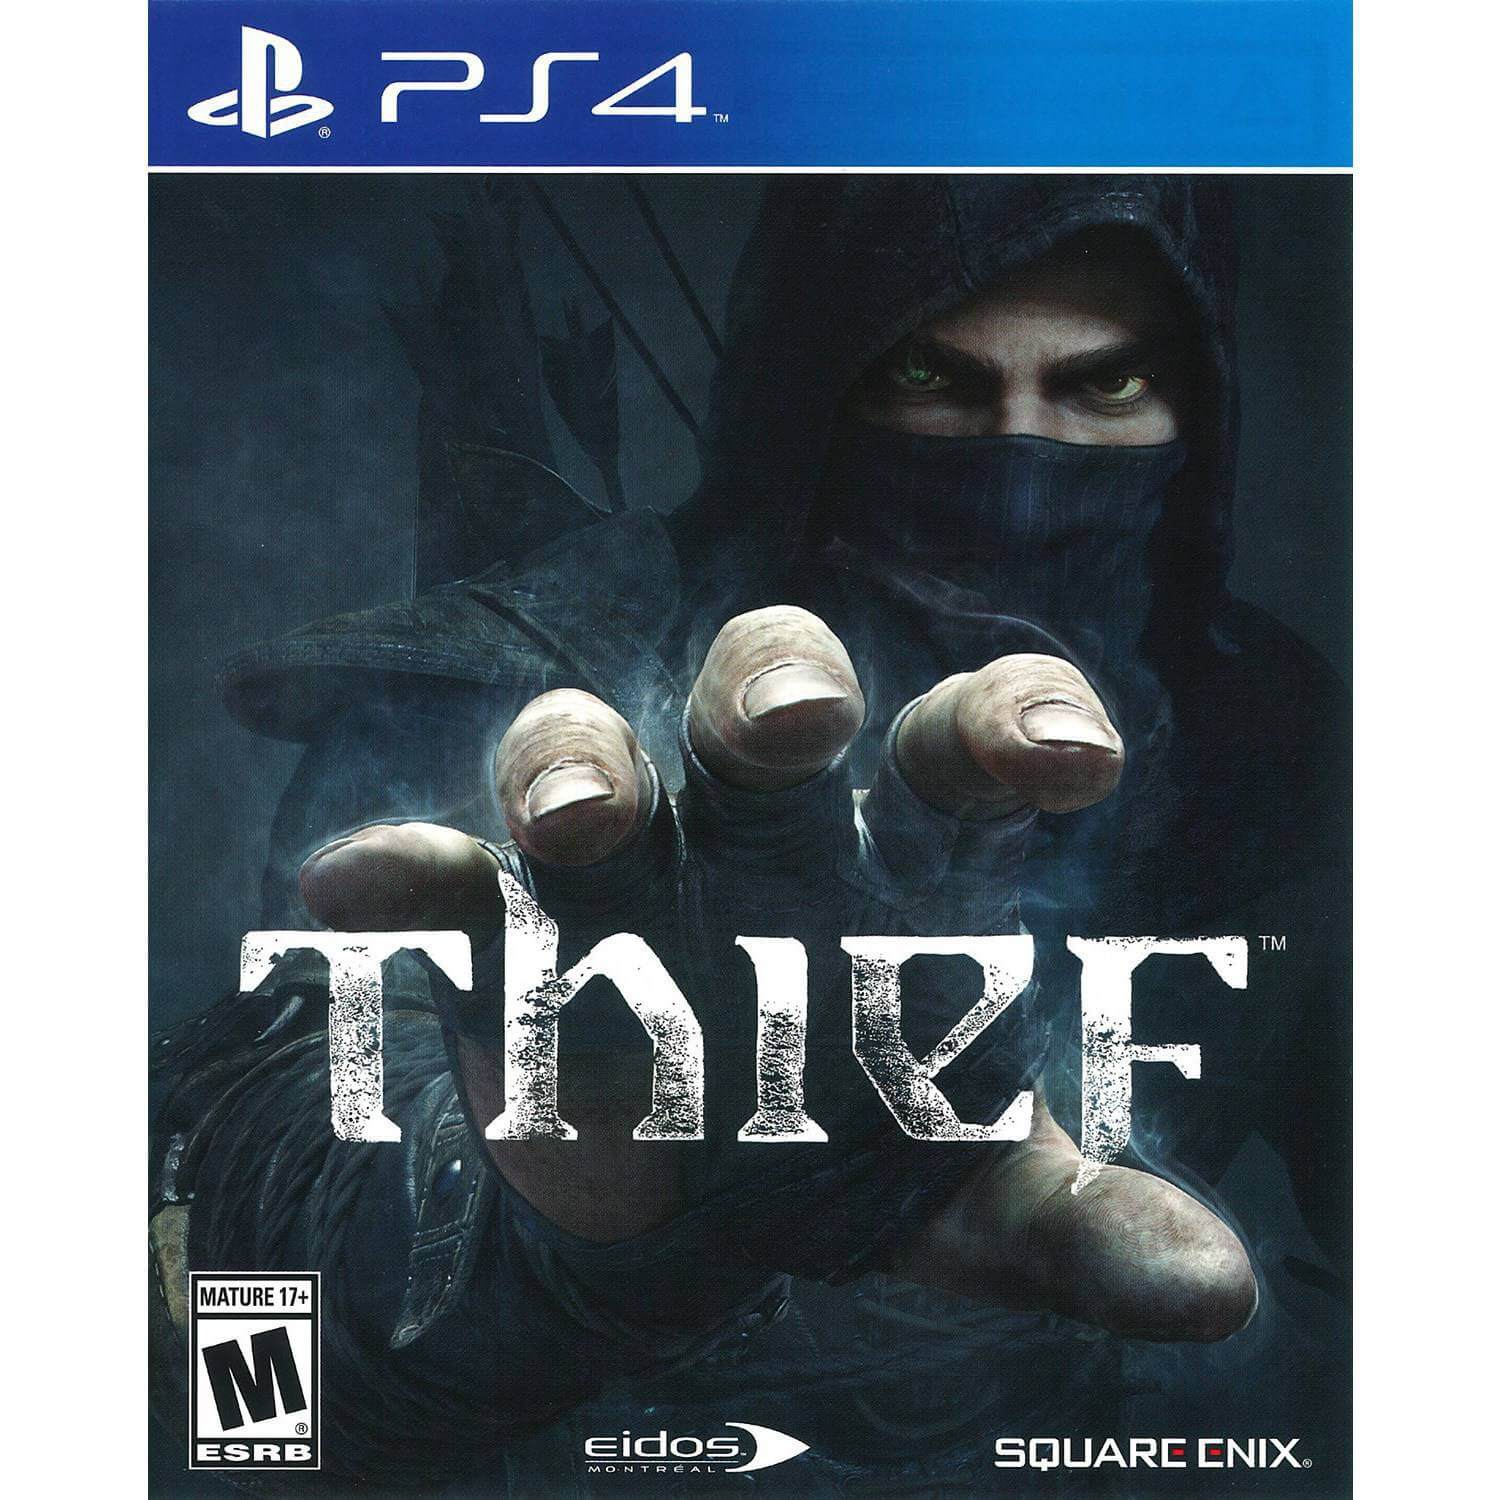 Thief Playstation 4 in Ghana